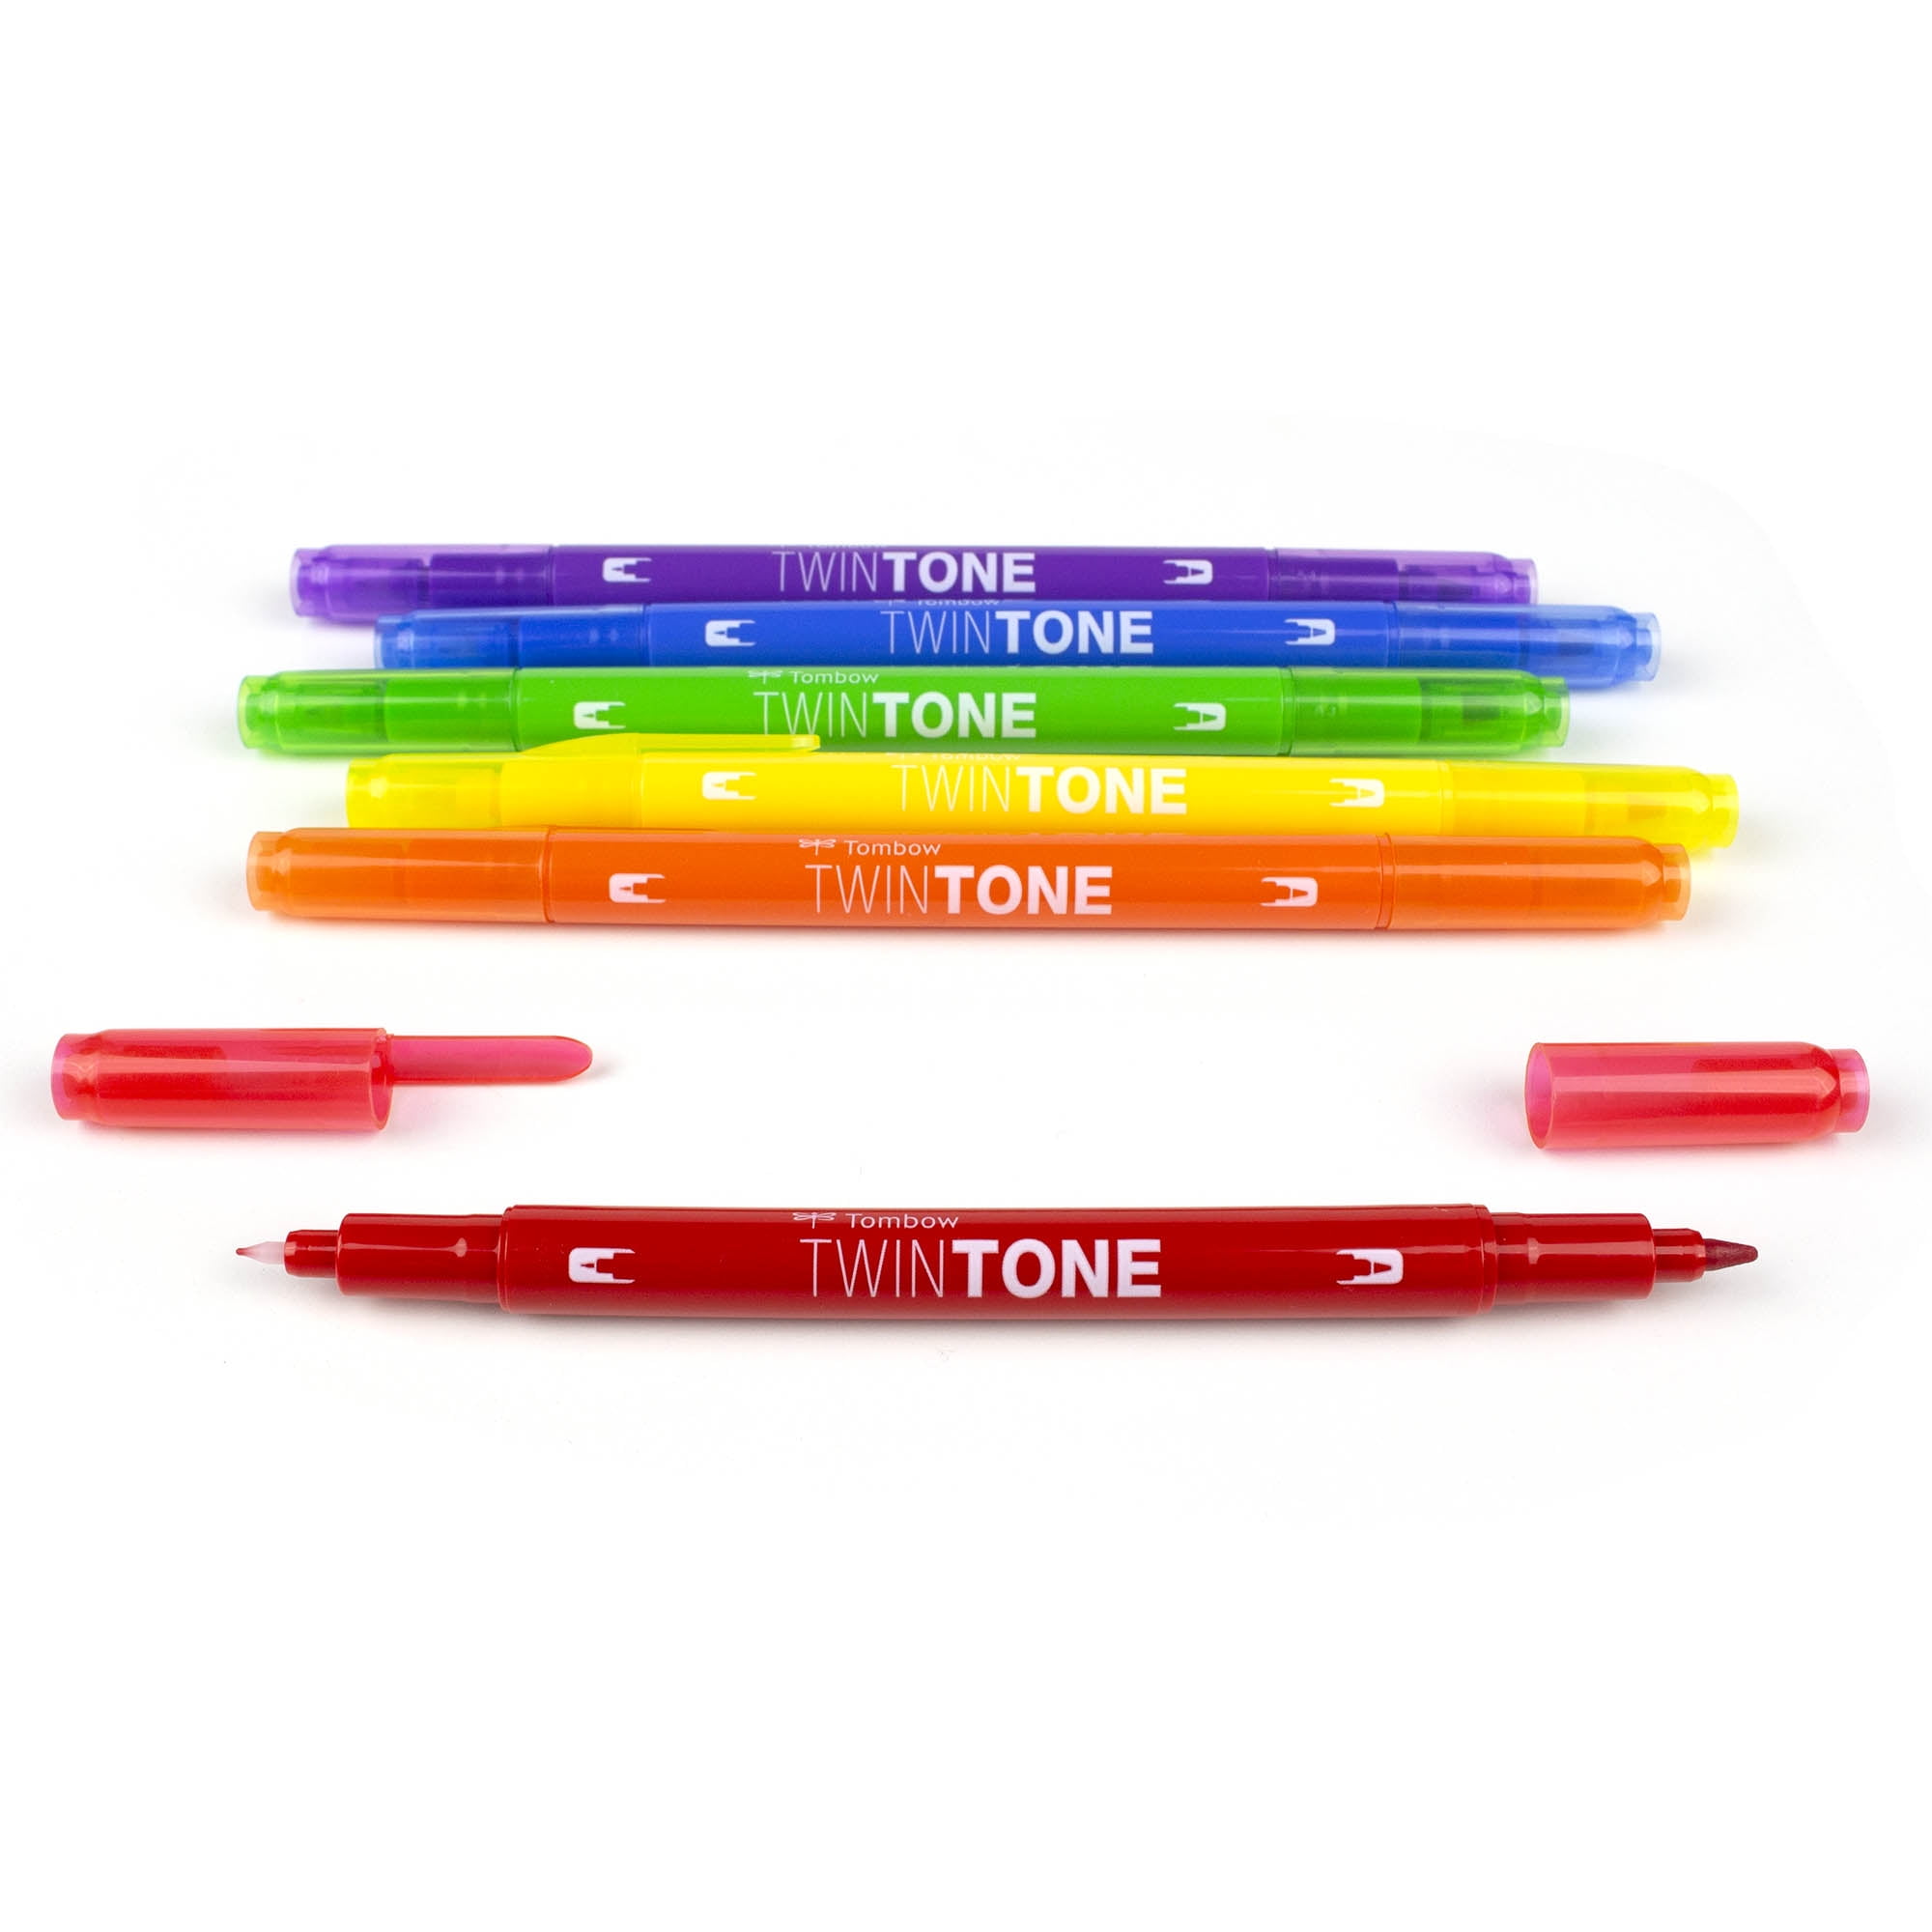 Dual Tone Markers — Write Impressions